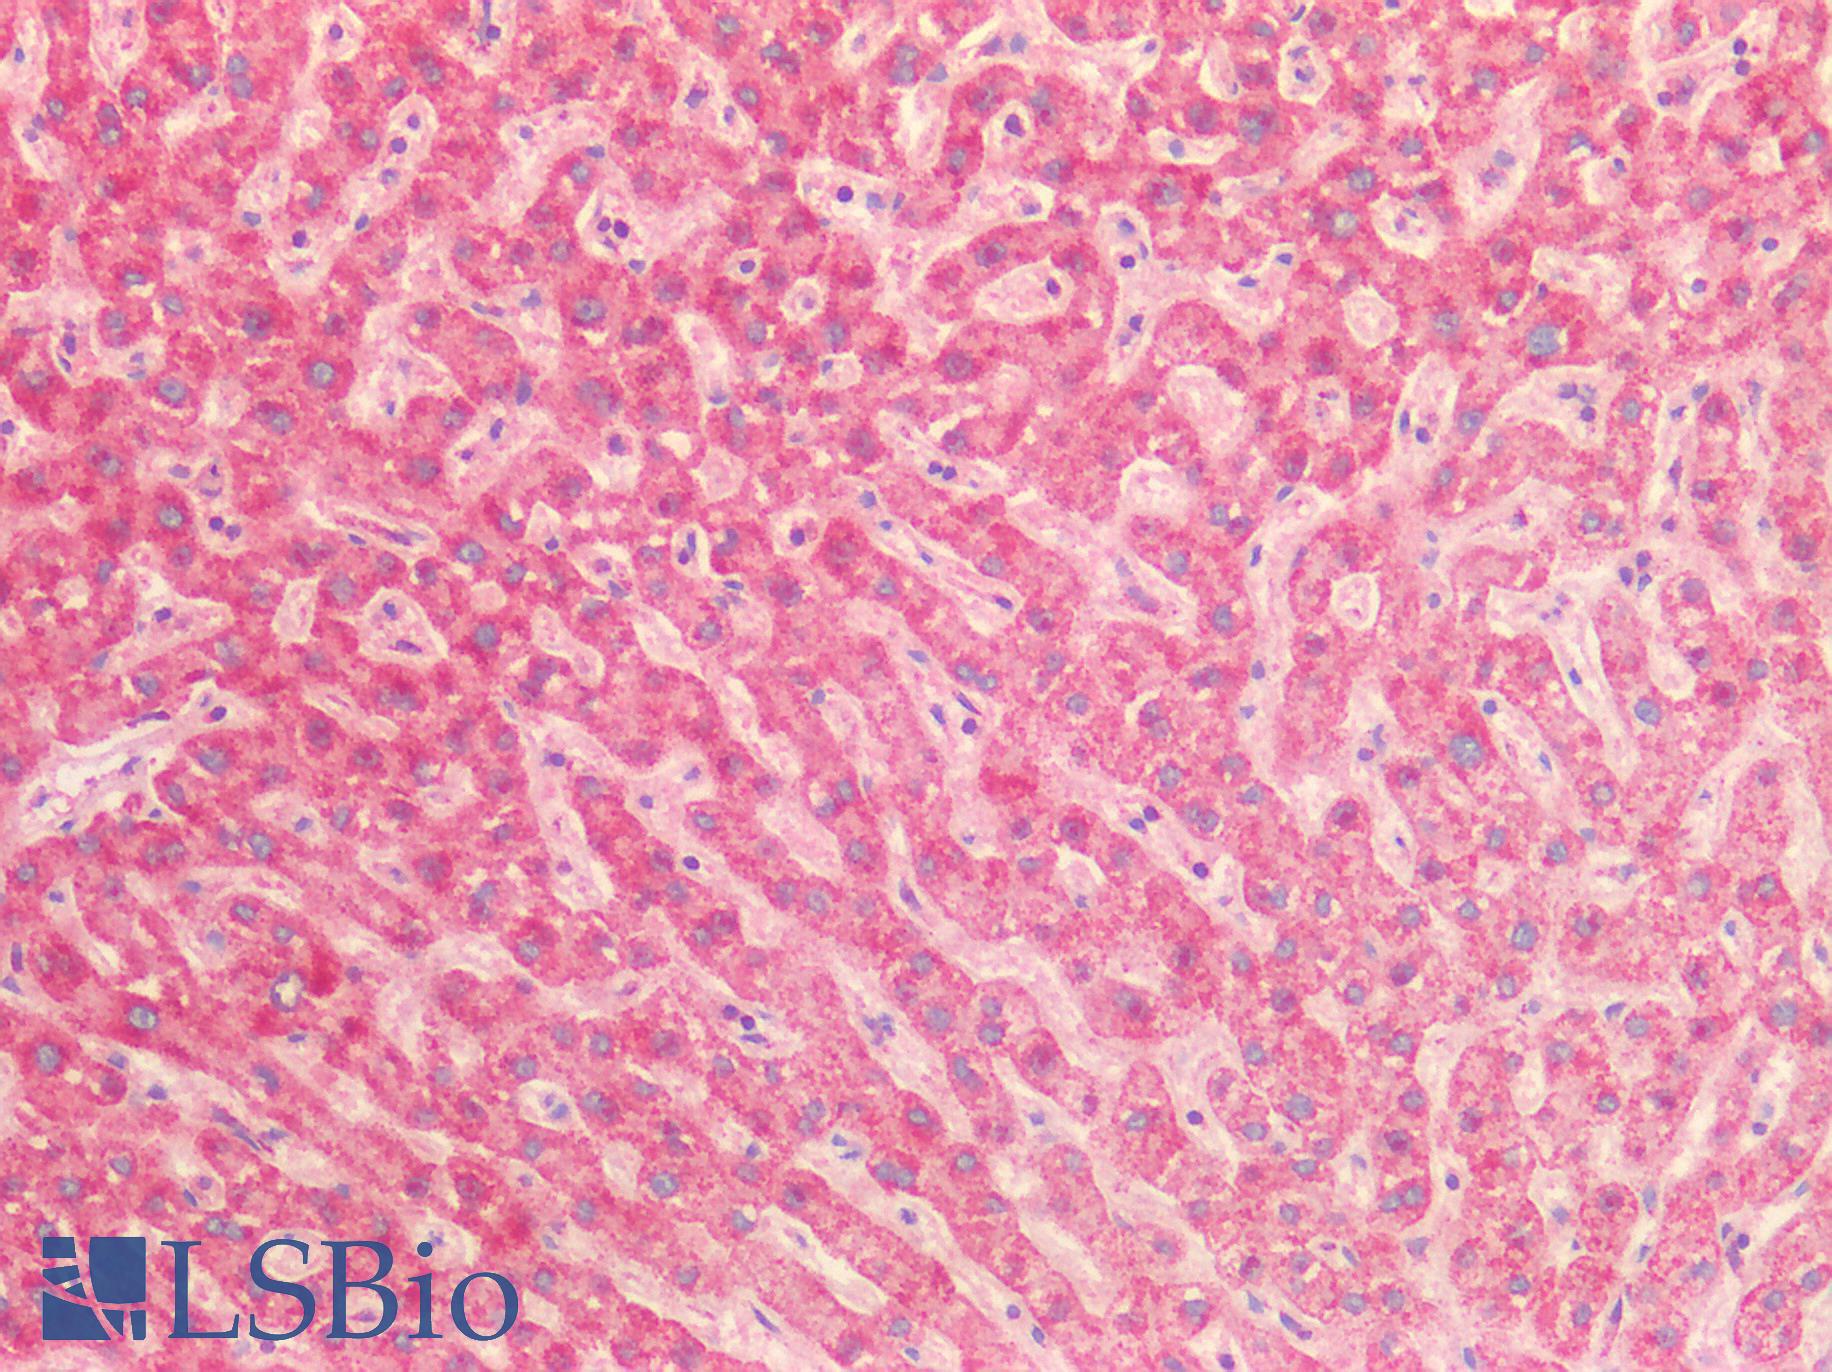 HSPA9 / Mortalin / GRP75 Antibody - Human Liver: Formalin-Fixed, Paraffin-Embedded (FFPE)